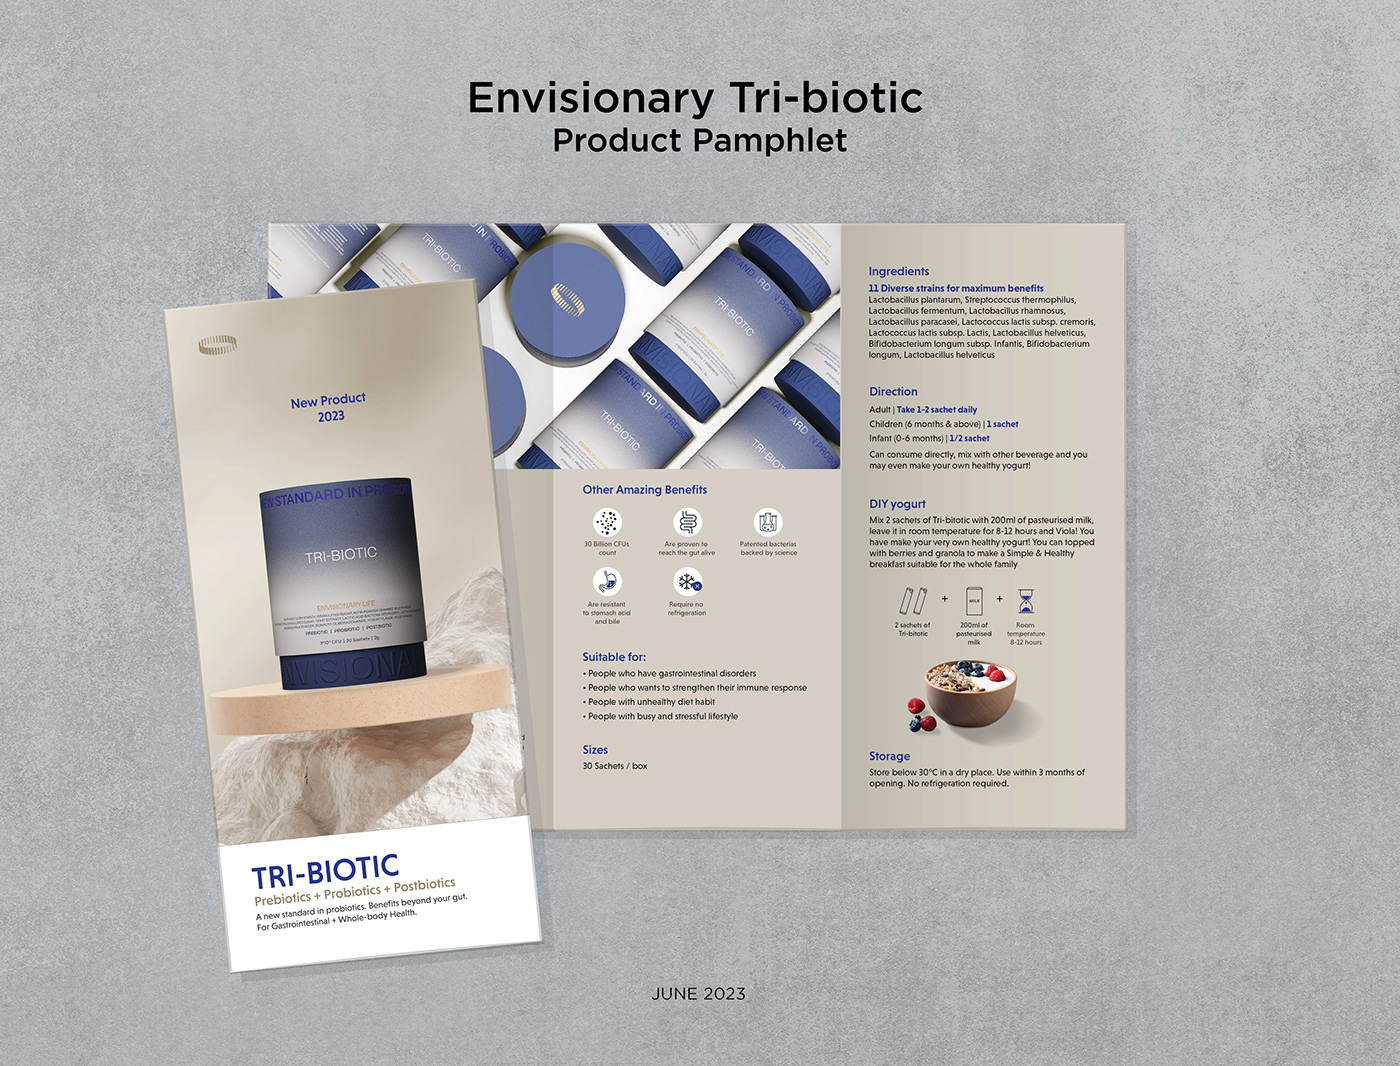 pamphlet flyer Graphic Designer mlm multi level marketing Envisionary Life Tri-biotic